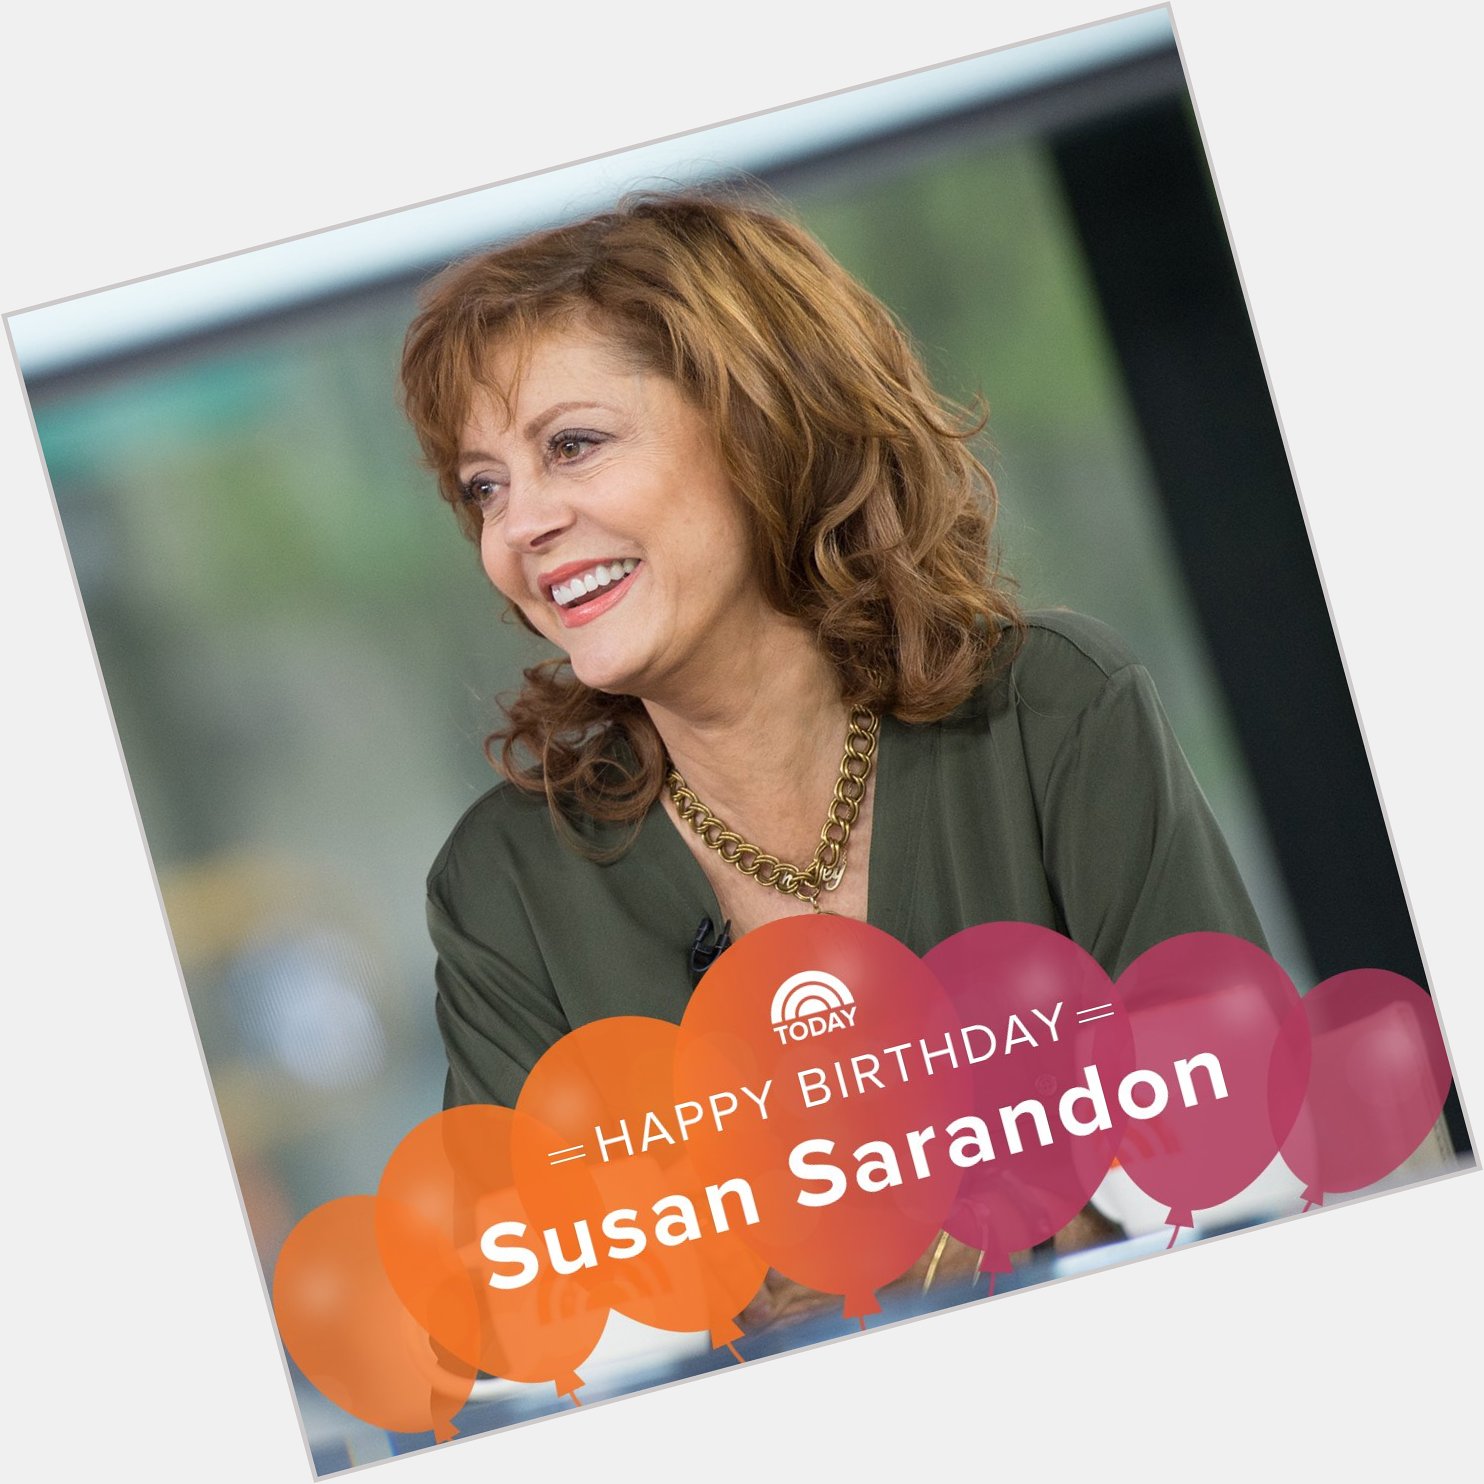 Happy birthday, Susan Sarandon!  